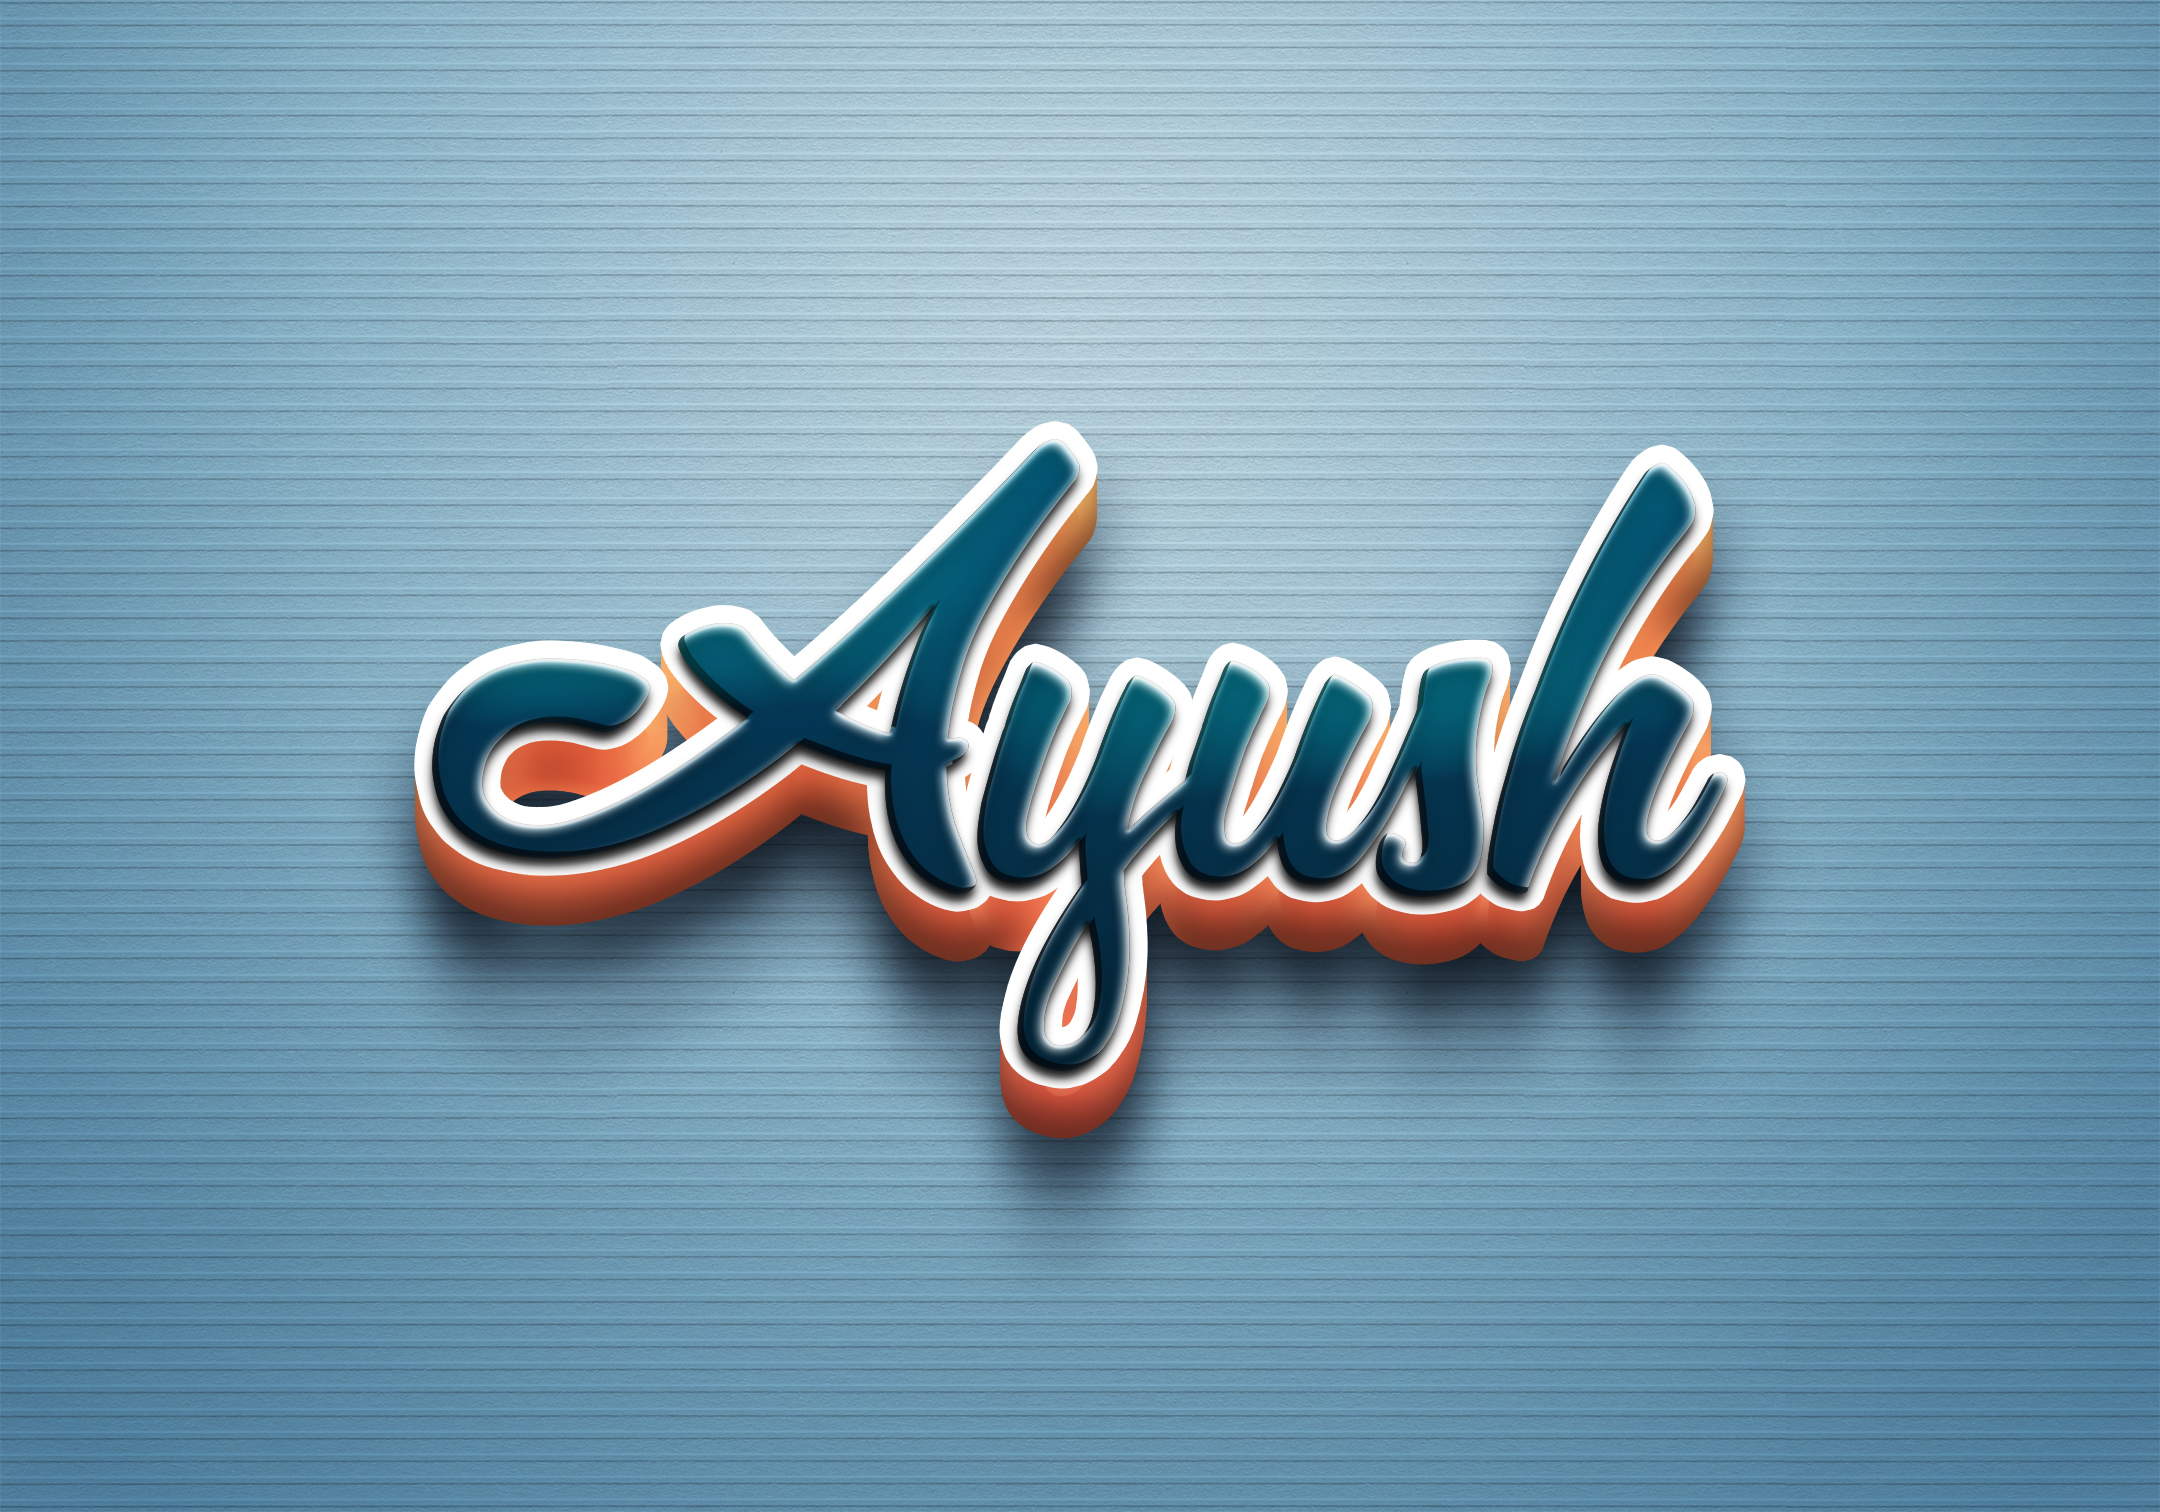 ayush name wallpaper,green,font,text,logo,graphics (#613596) - WallpaperUse